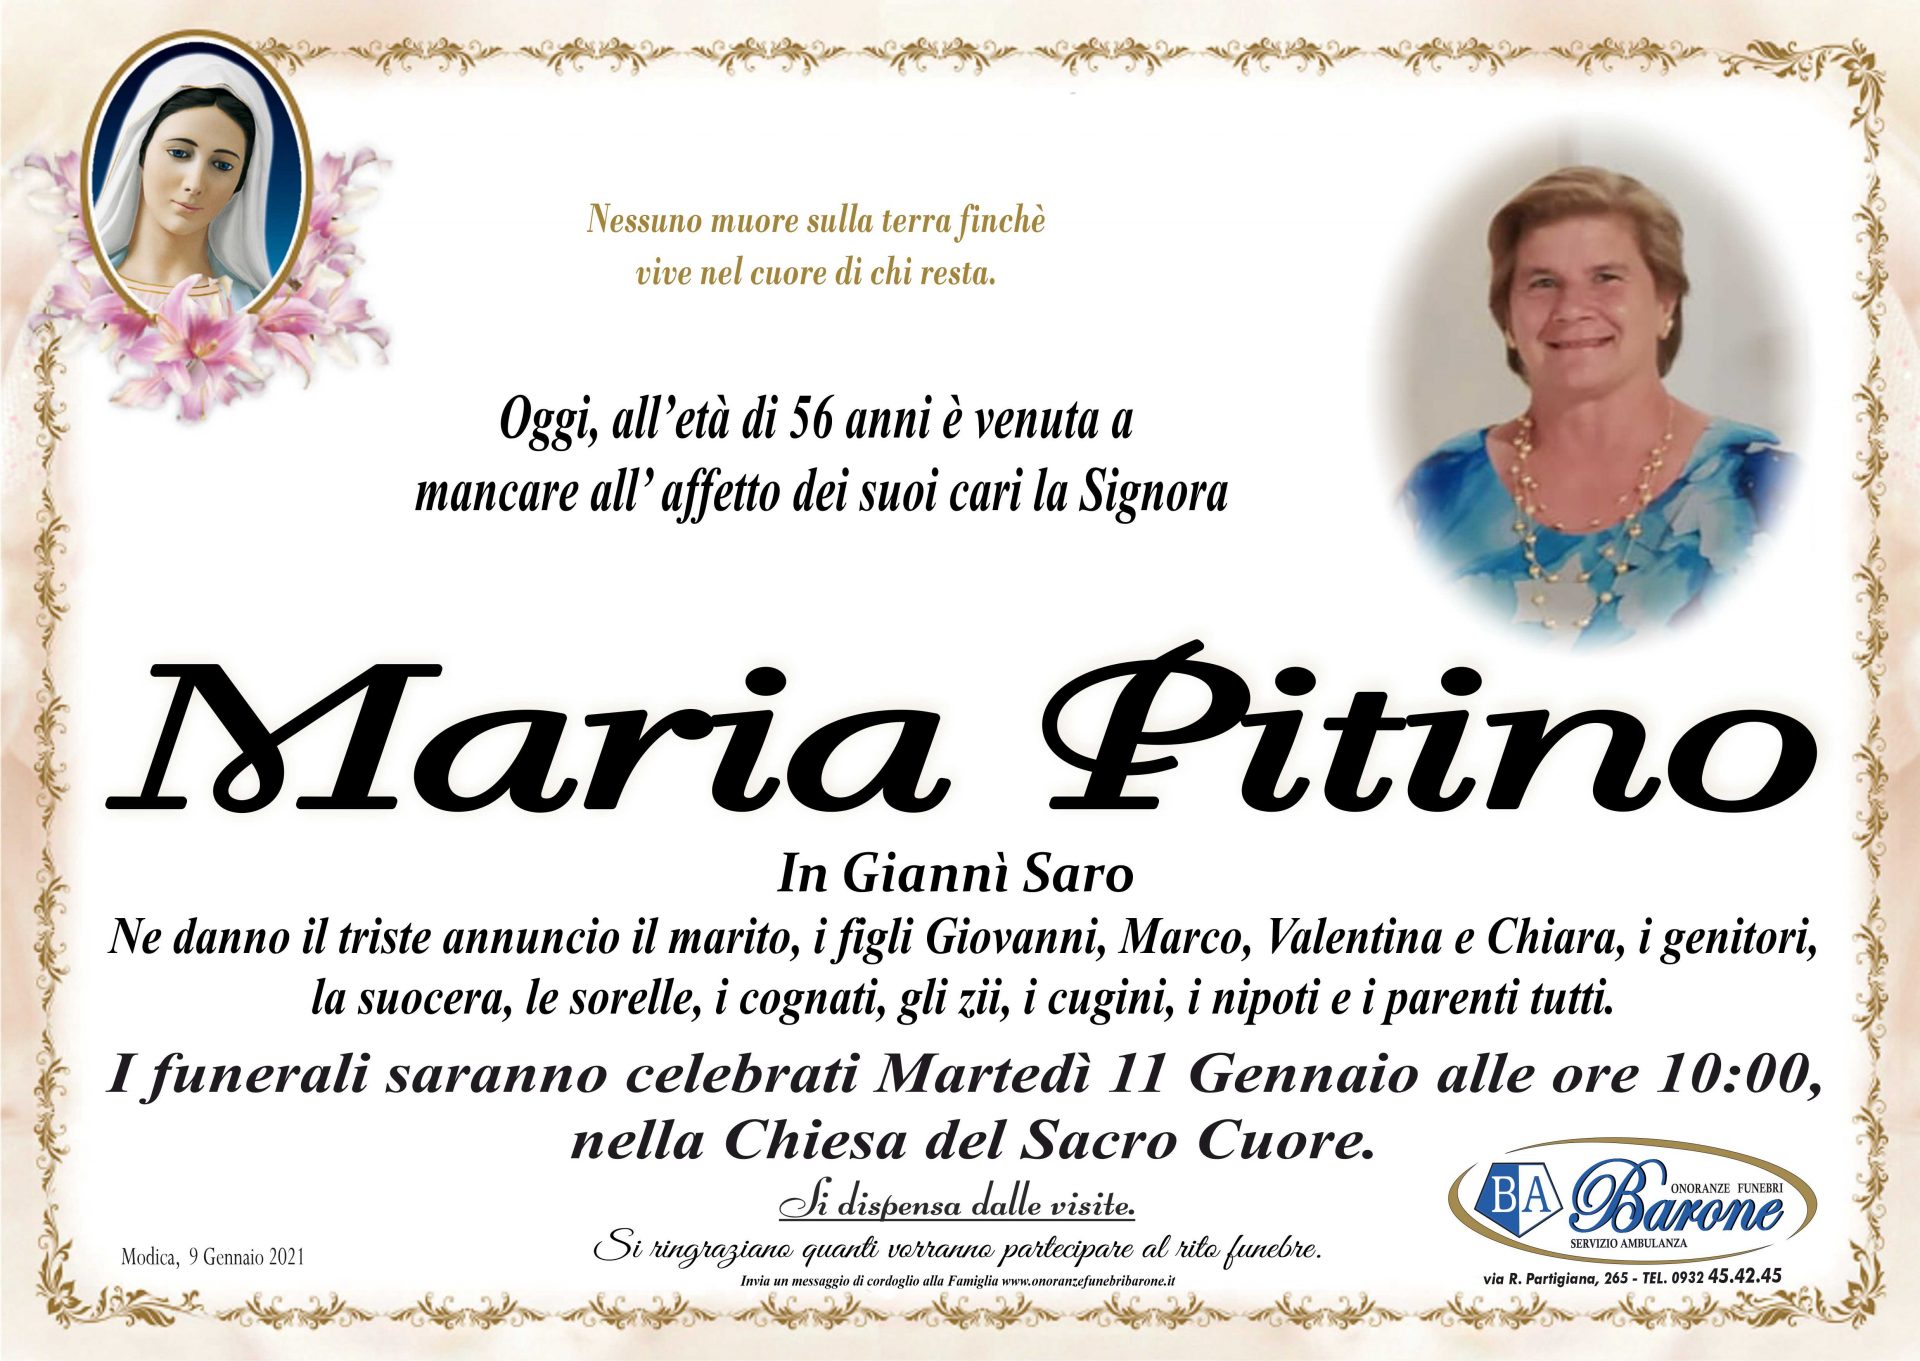 Maria Pitino